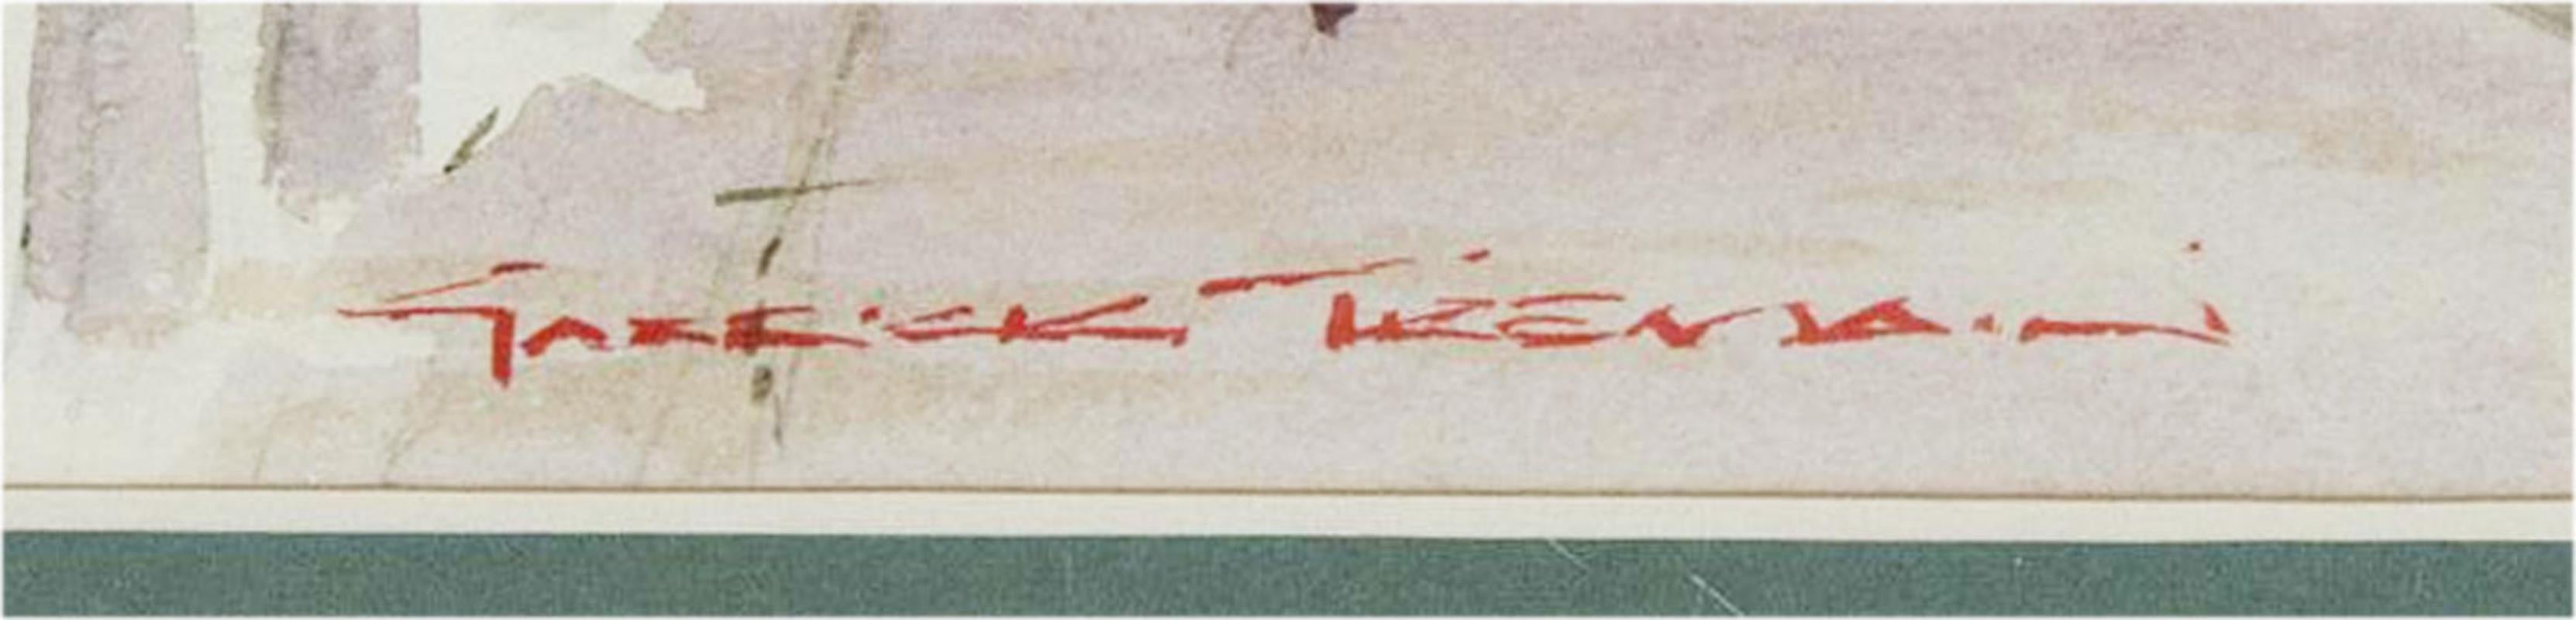 Garrick Tremain, geb. 1941, signiertes Aquarell, Fondamento D. San Romit im Angebot 1